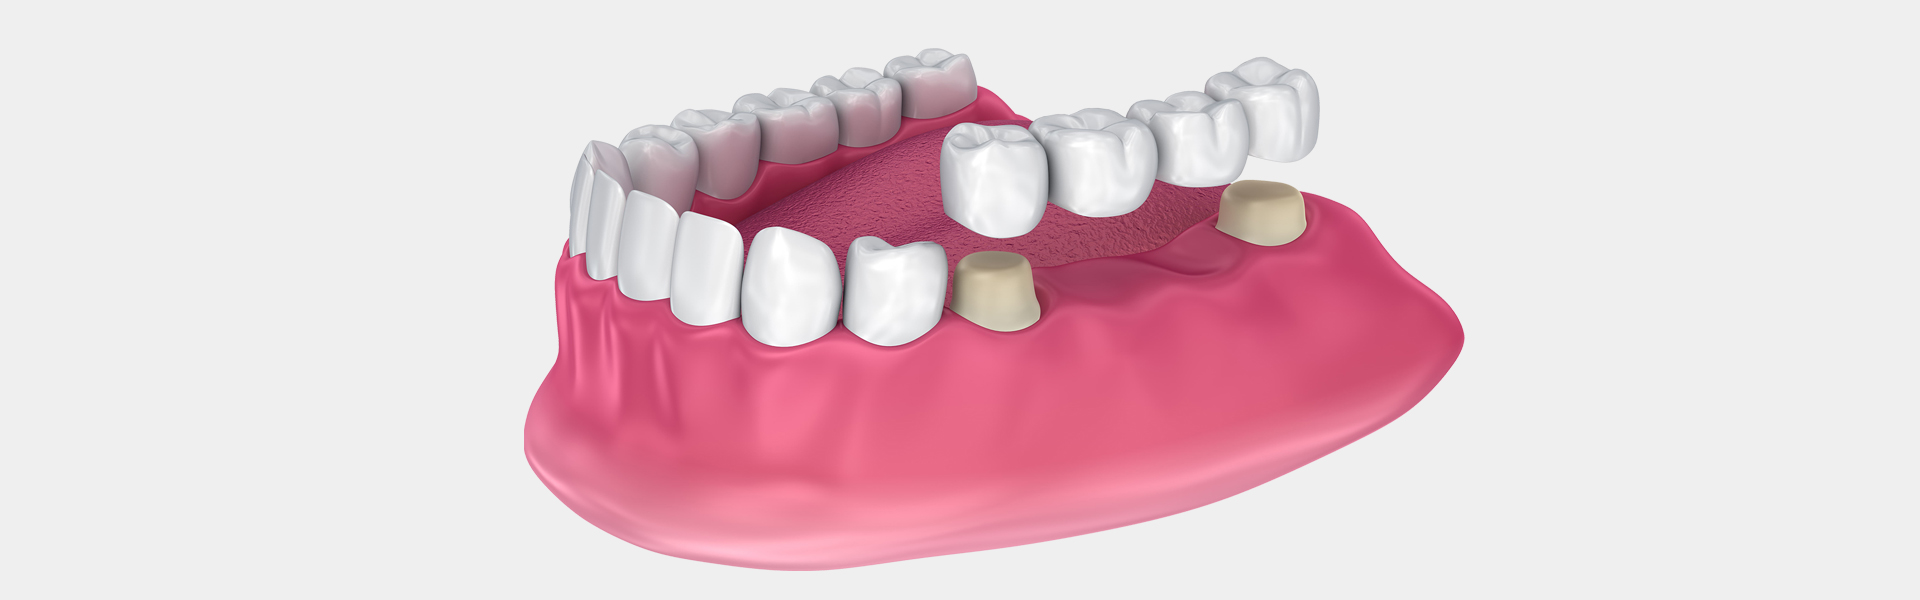 Restorative Dentistry: The Benefits Of Dental Bridge